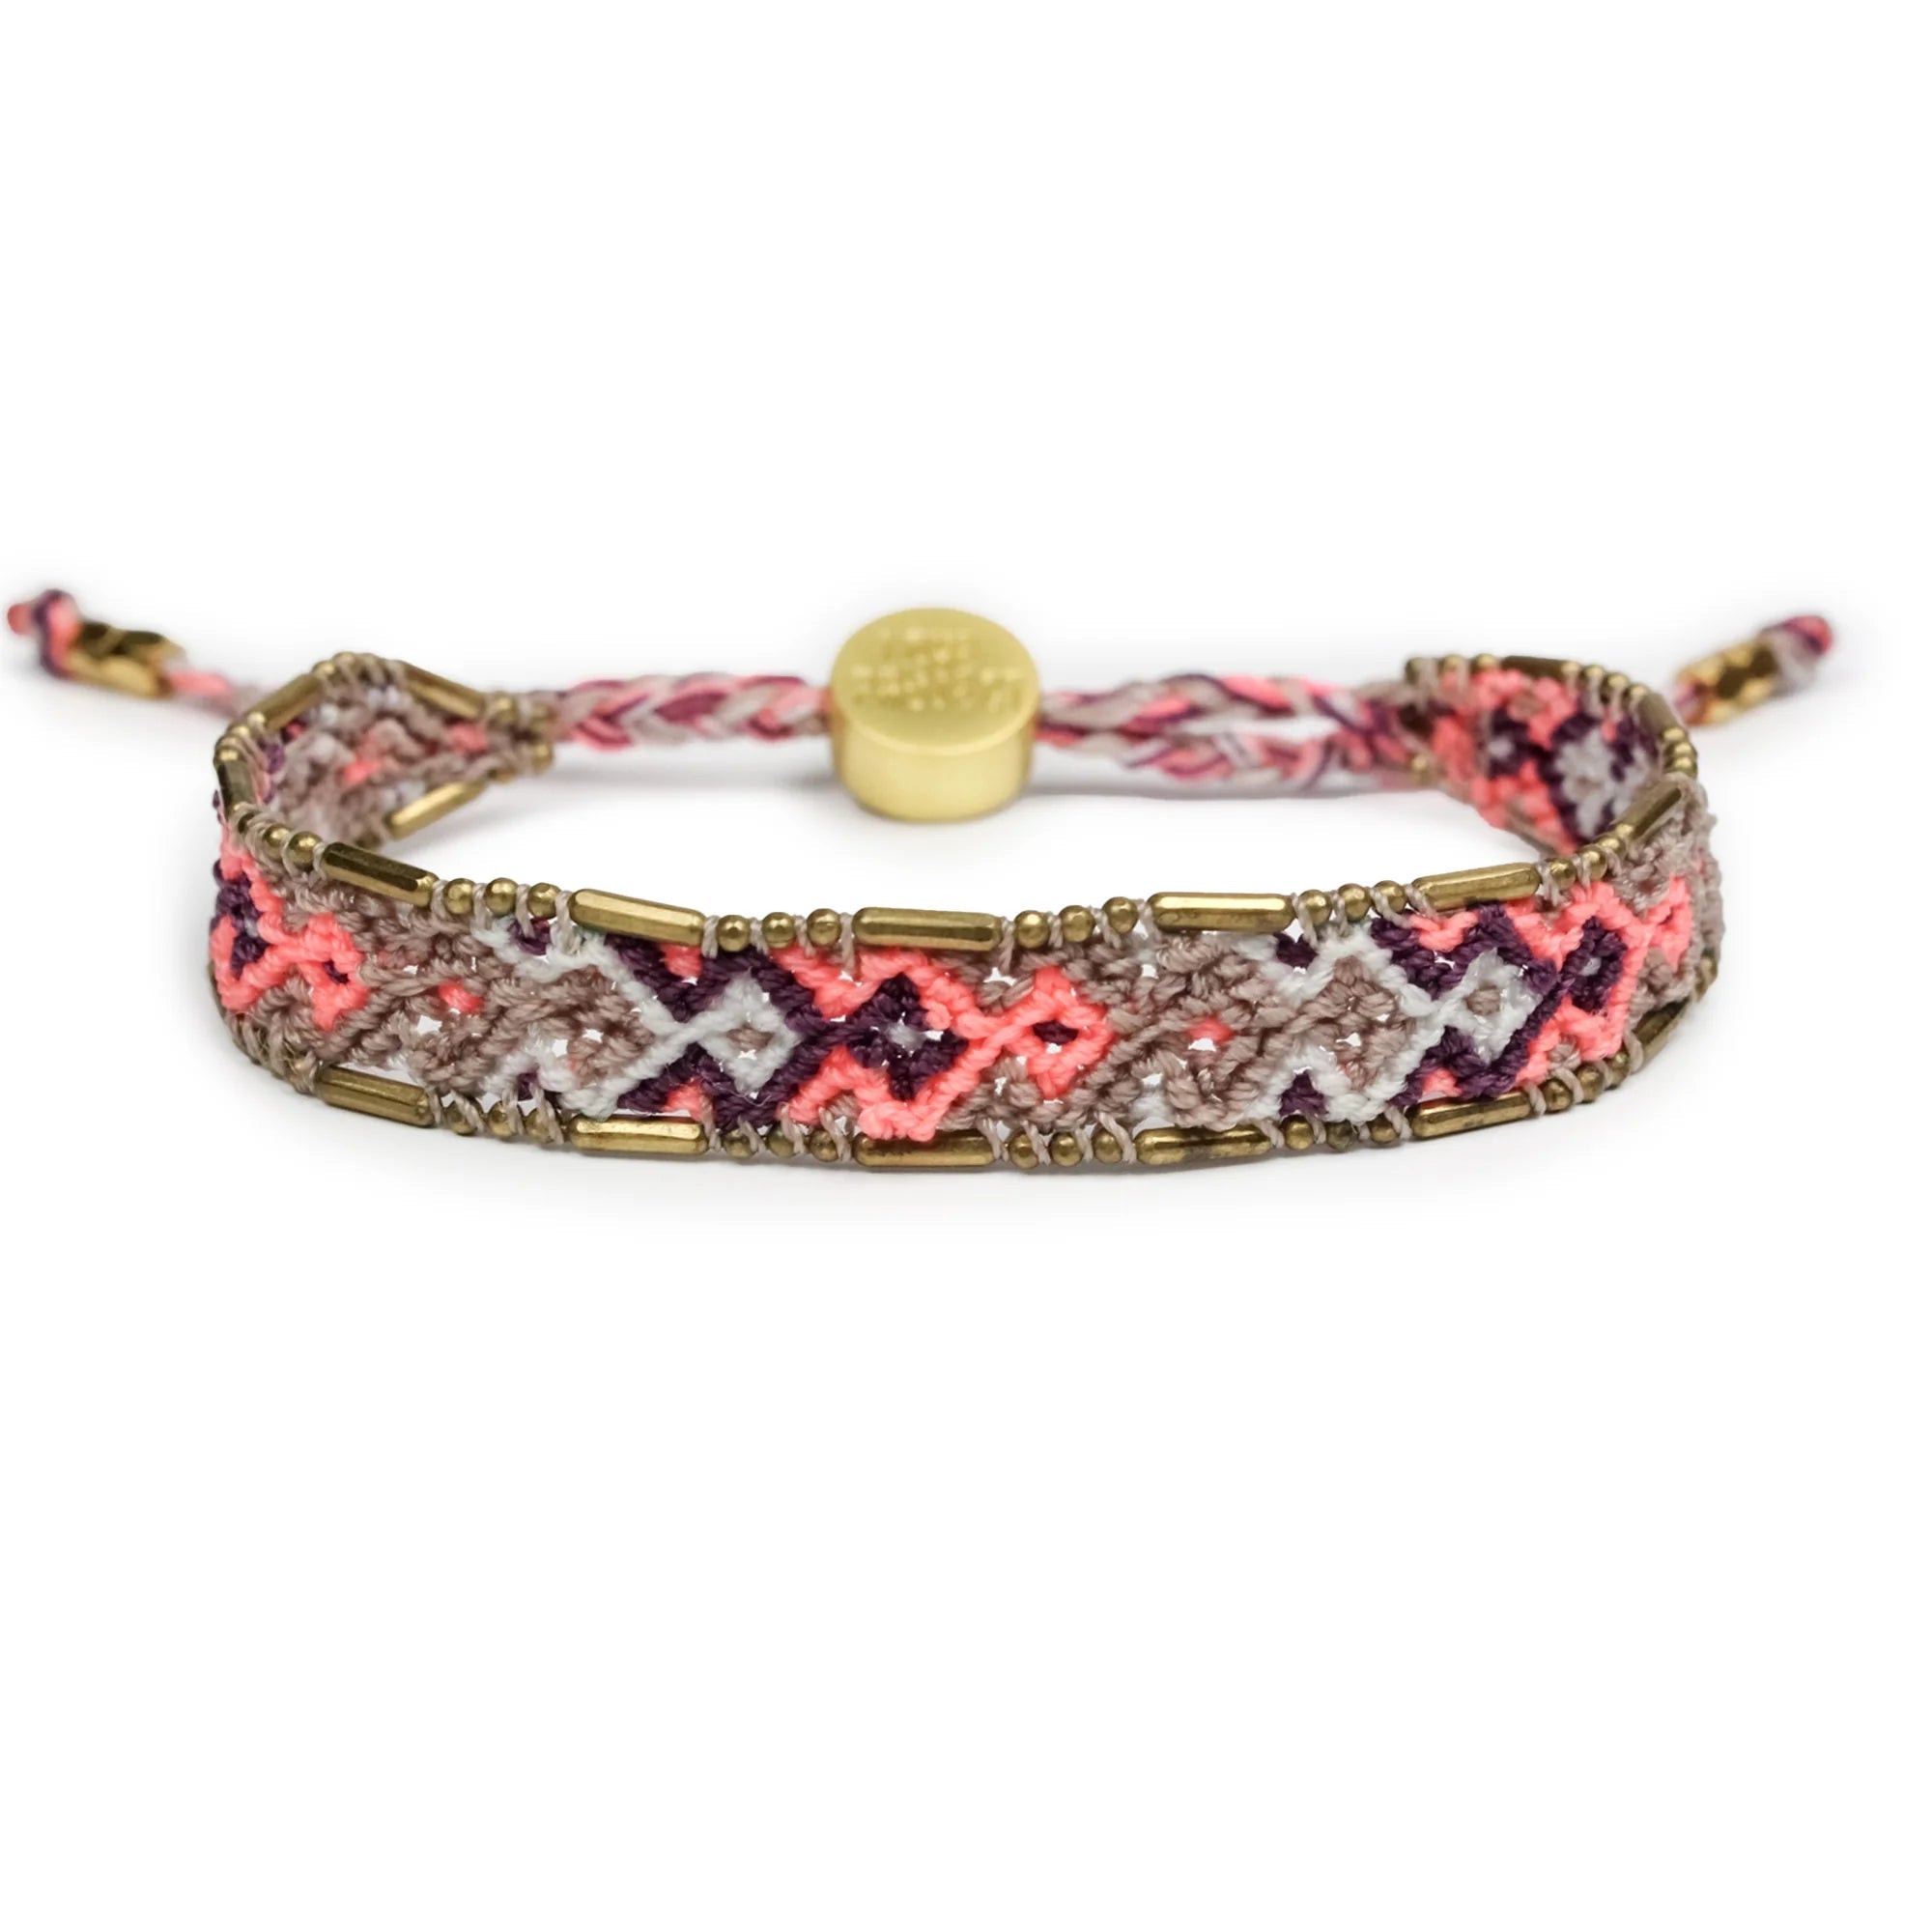 Bali Friendship Bracelet- Sold Individually